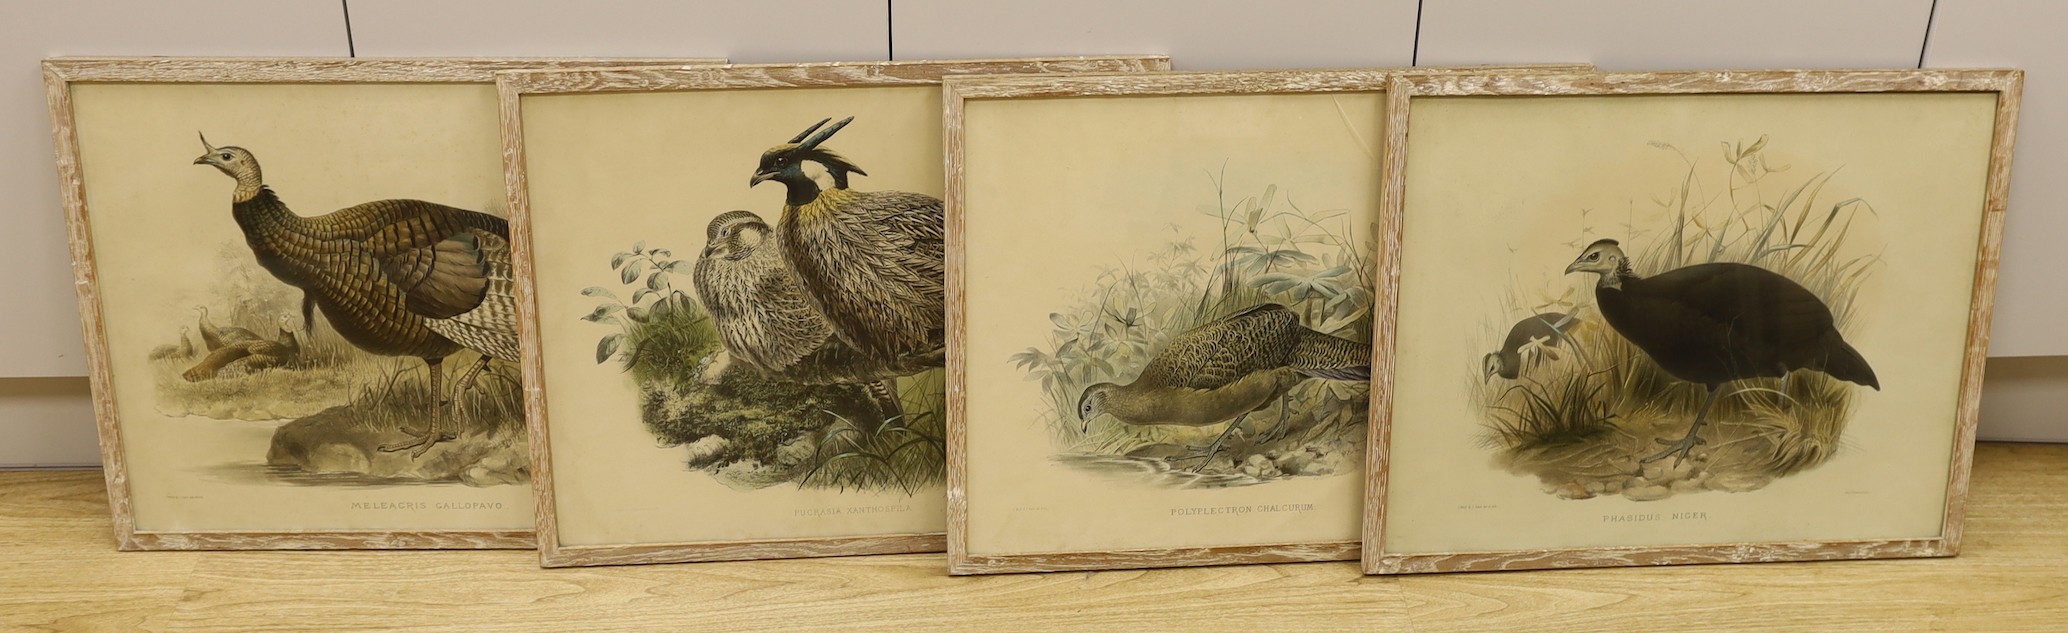 J. Wolf & J. Smit, Four handcoloured lithographs, 19th century, large Birds, 37 x 58cm